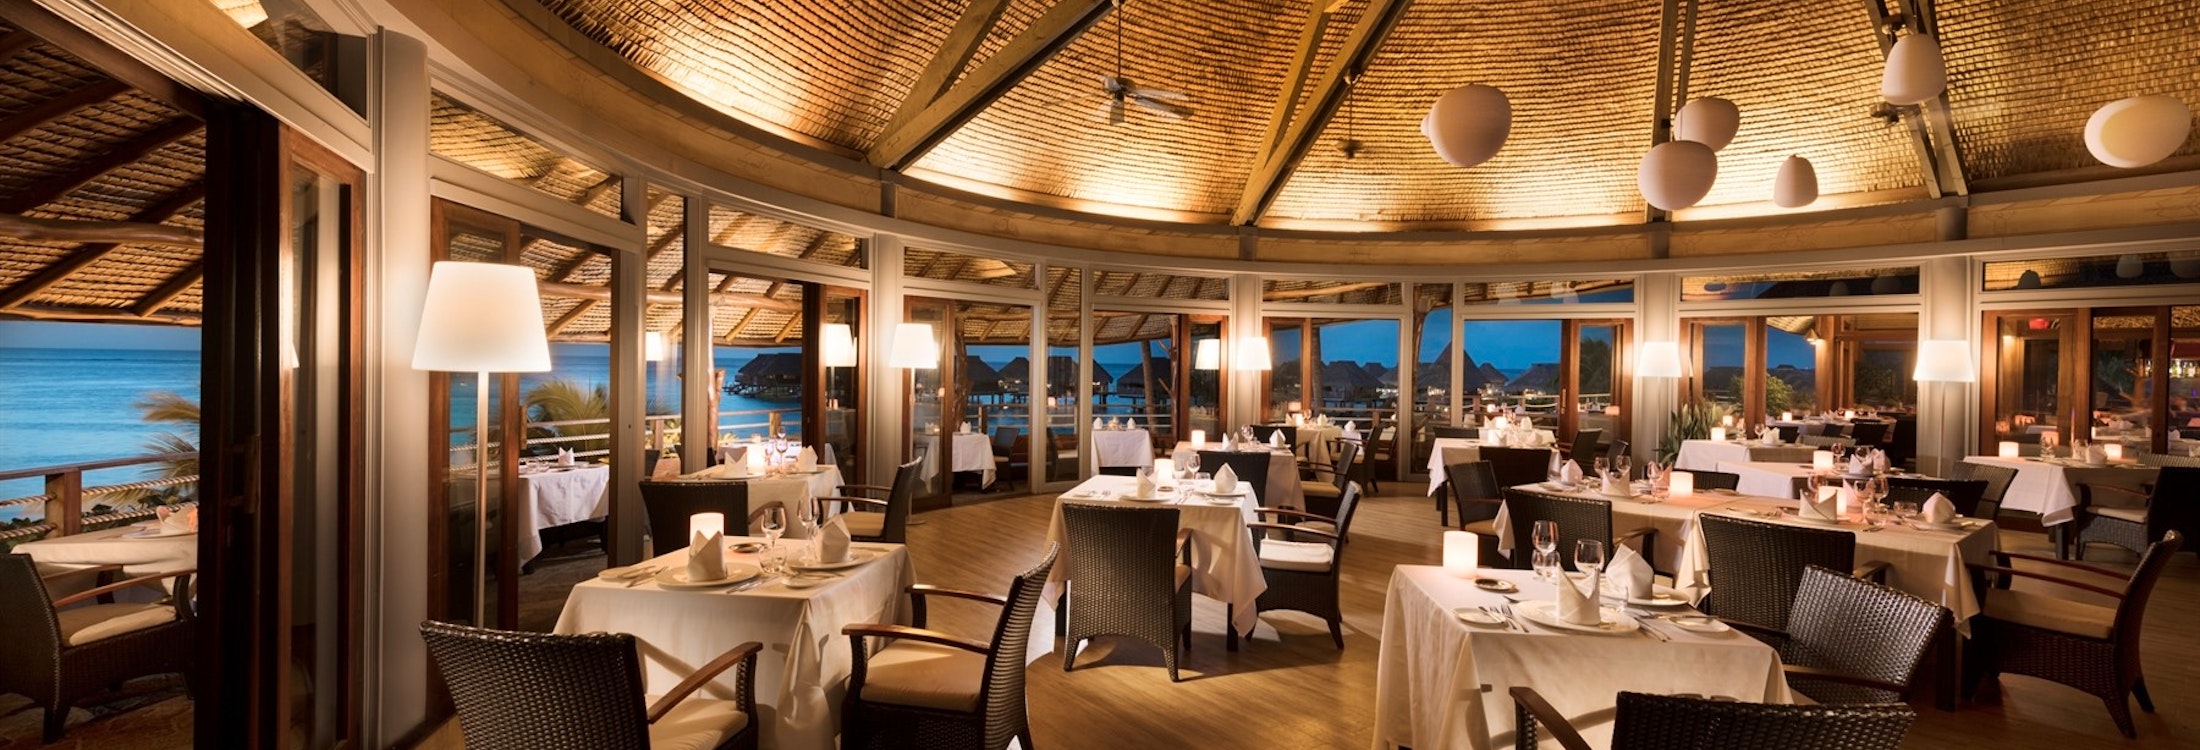 Arri Vahine Restaurant at Hilton Moorea Lagoon Resort & Spa, French Polynesia 